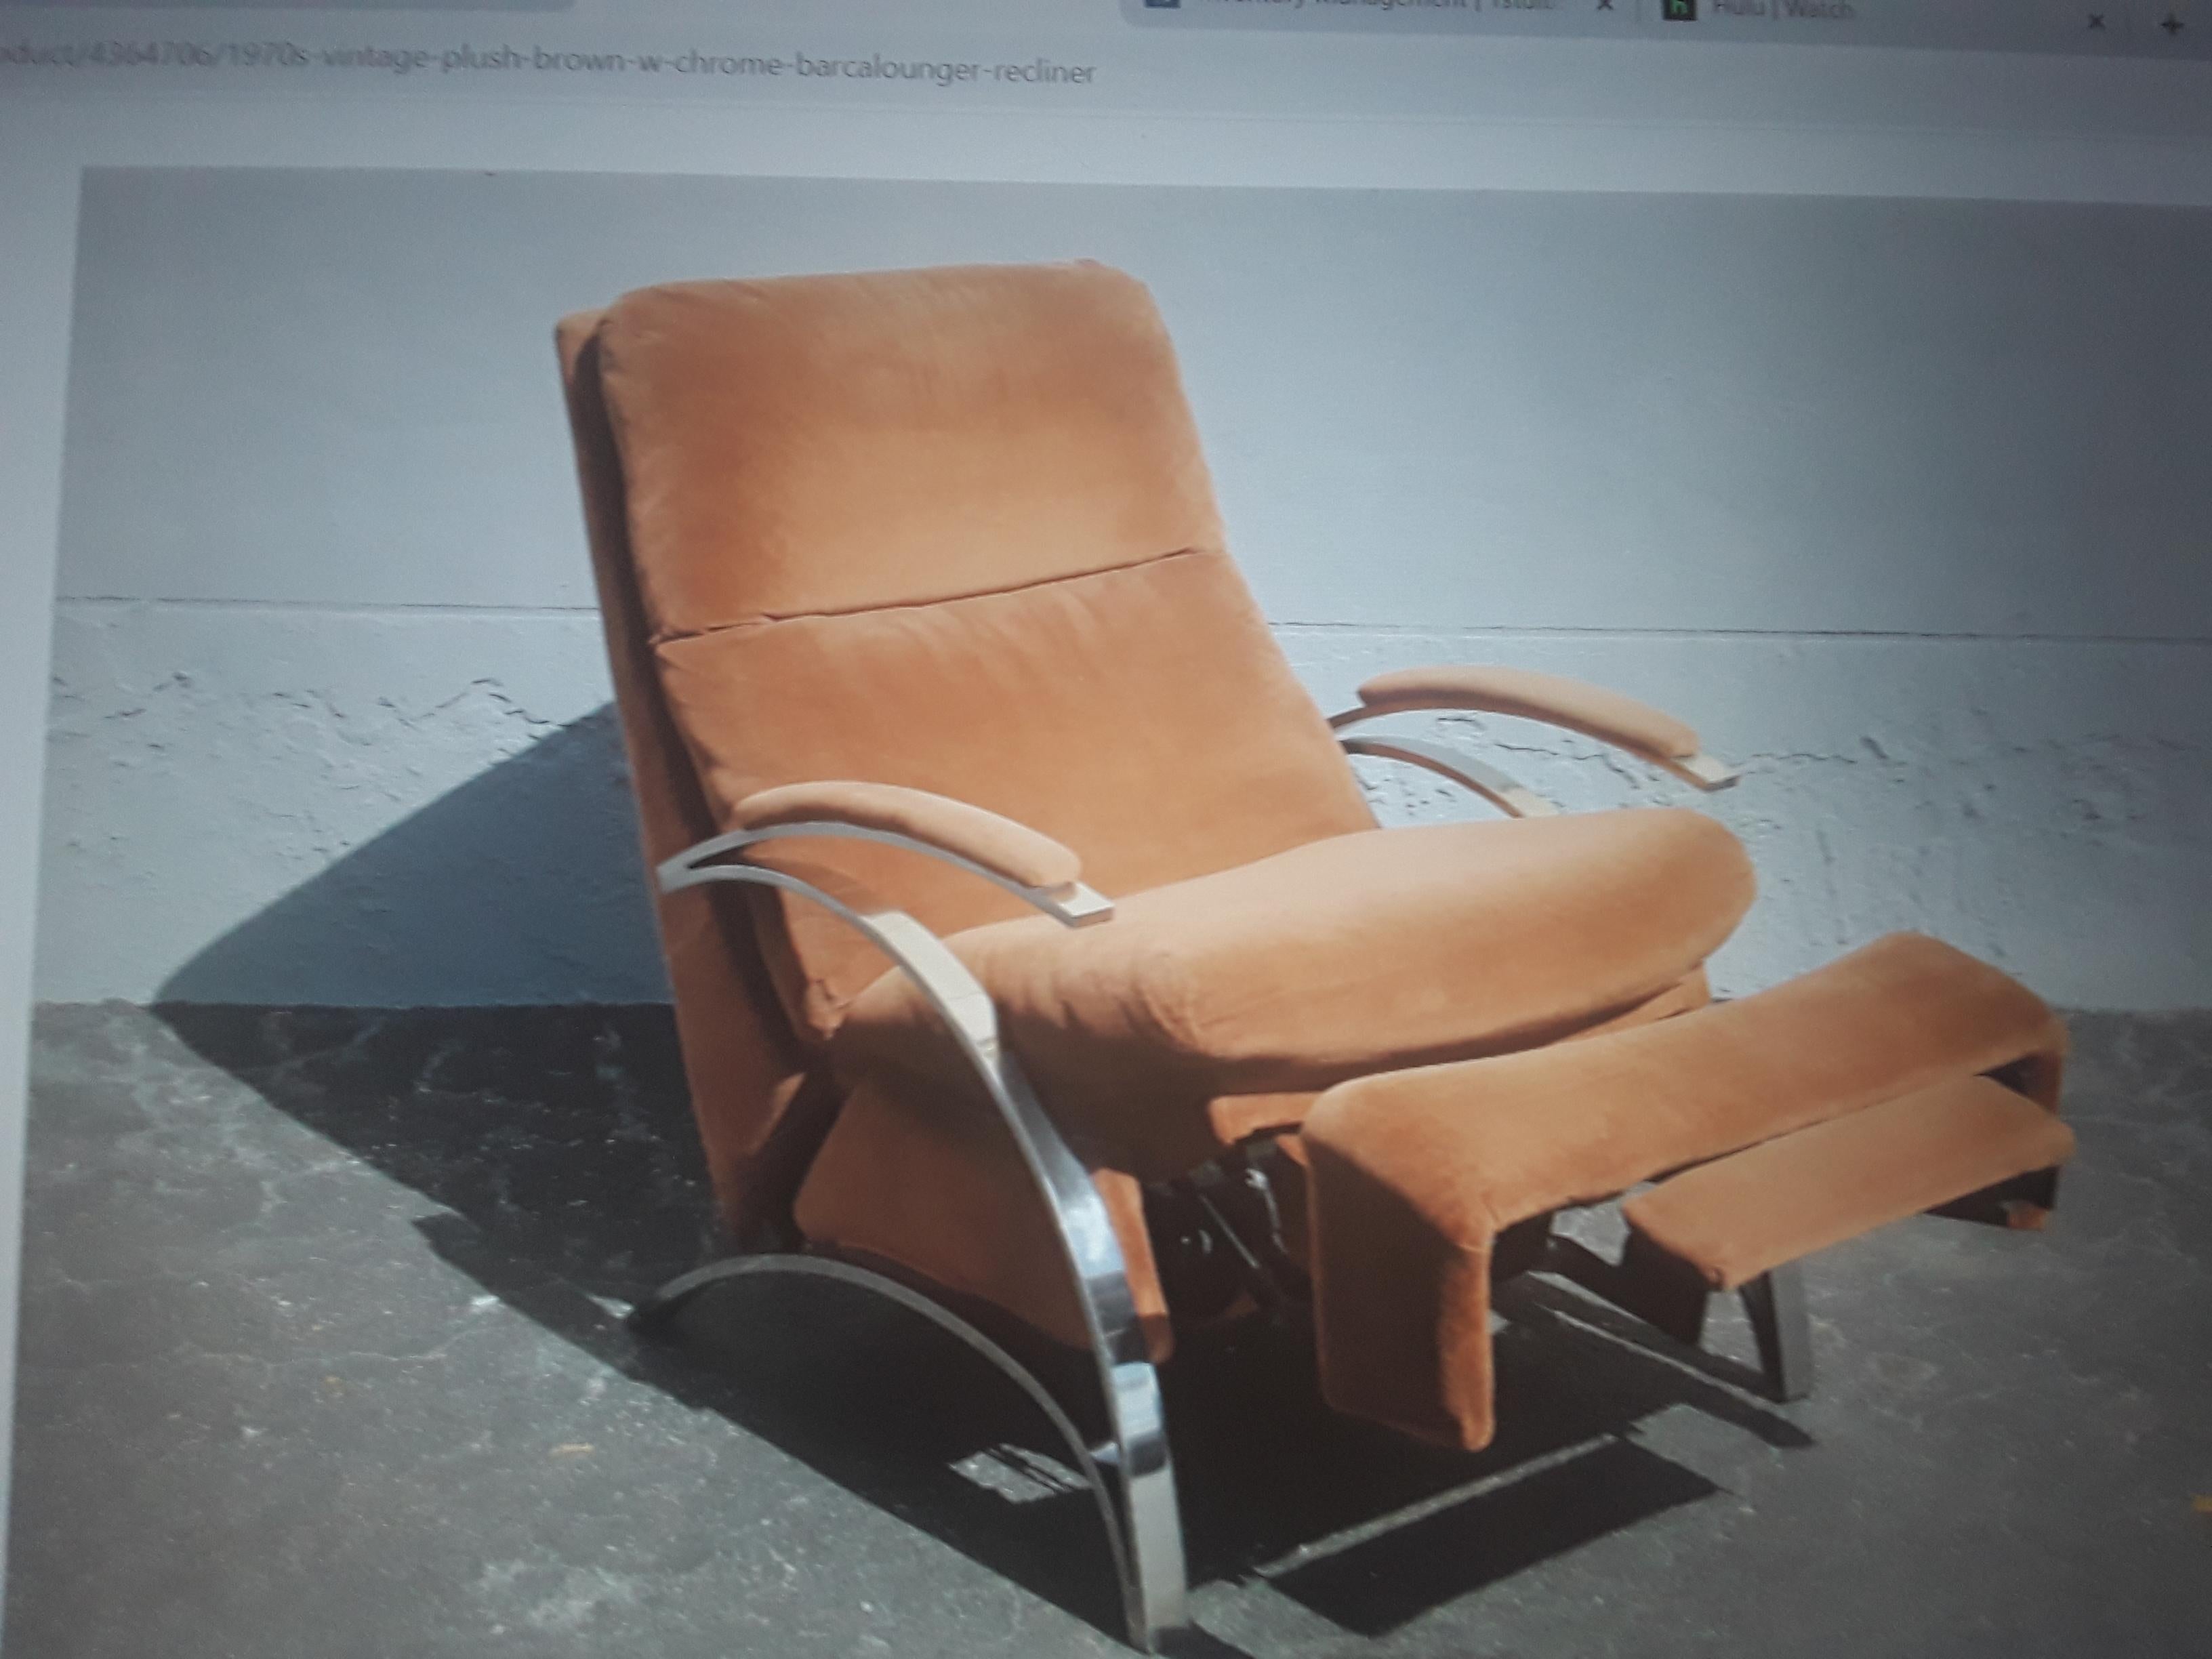 1970's Modern Plush Brown w/ Chrome Barcalounger Recliner/ Lounge Chair im Angebot 7